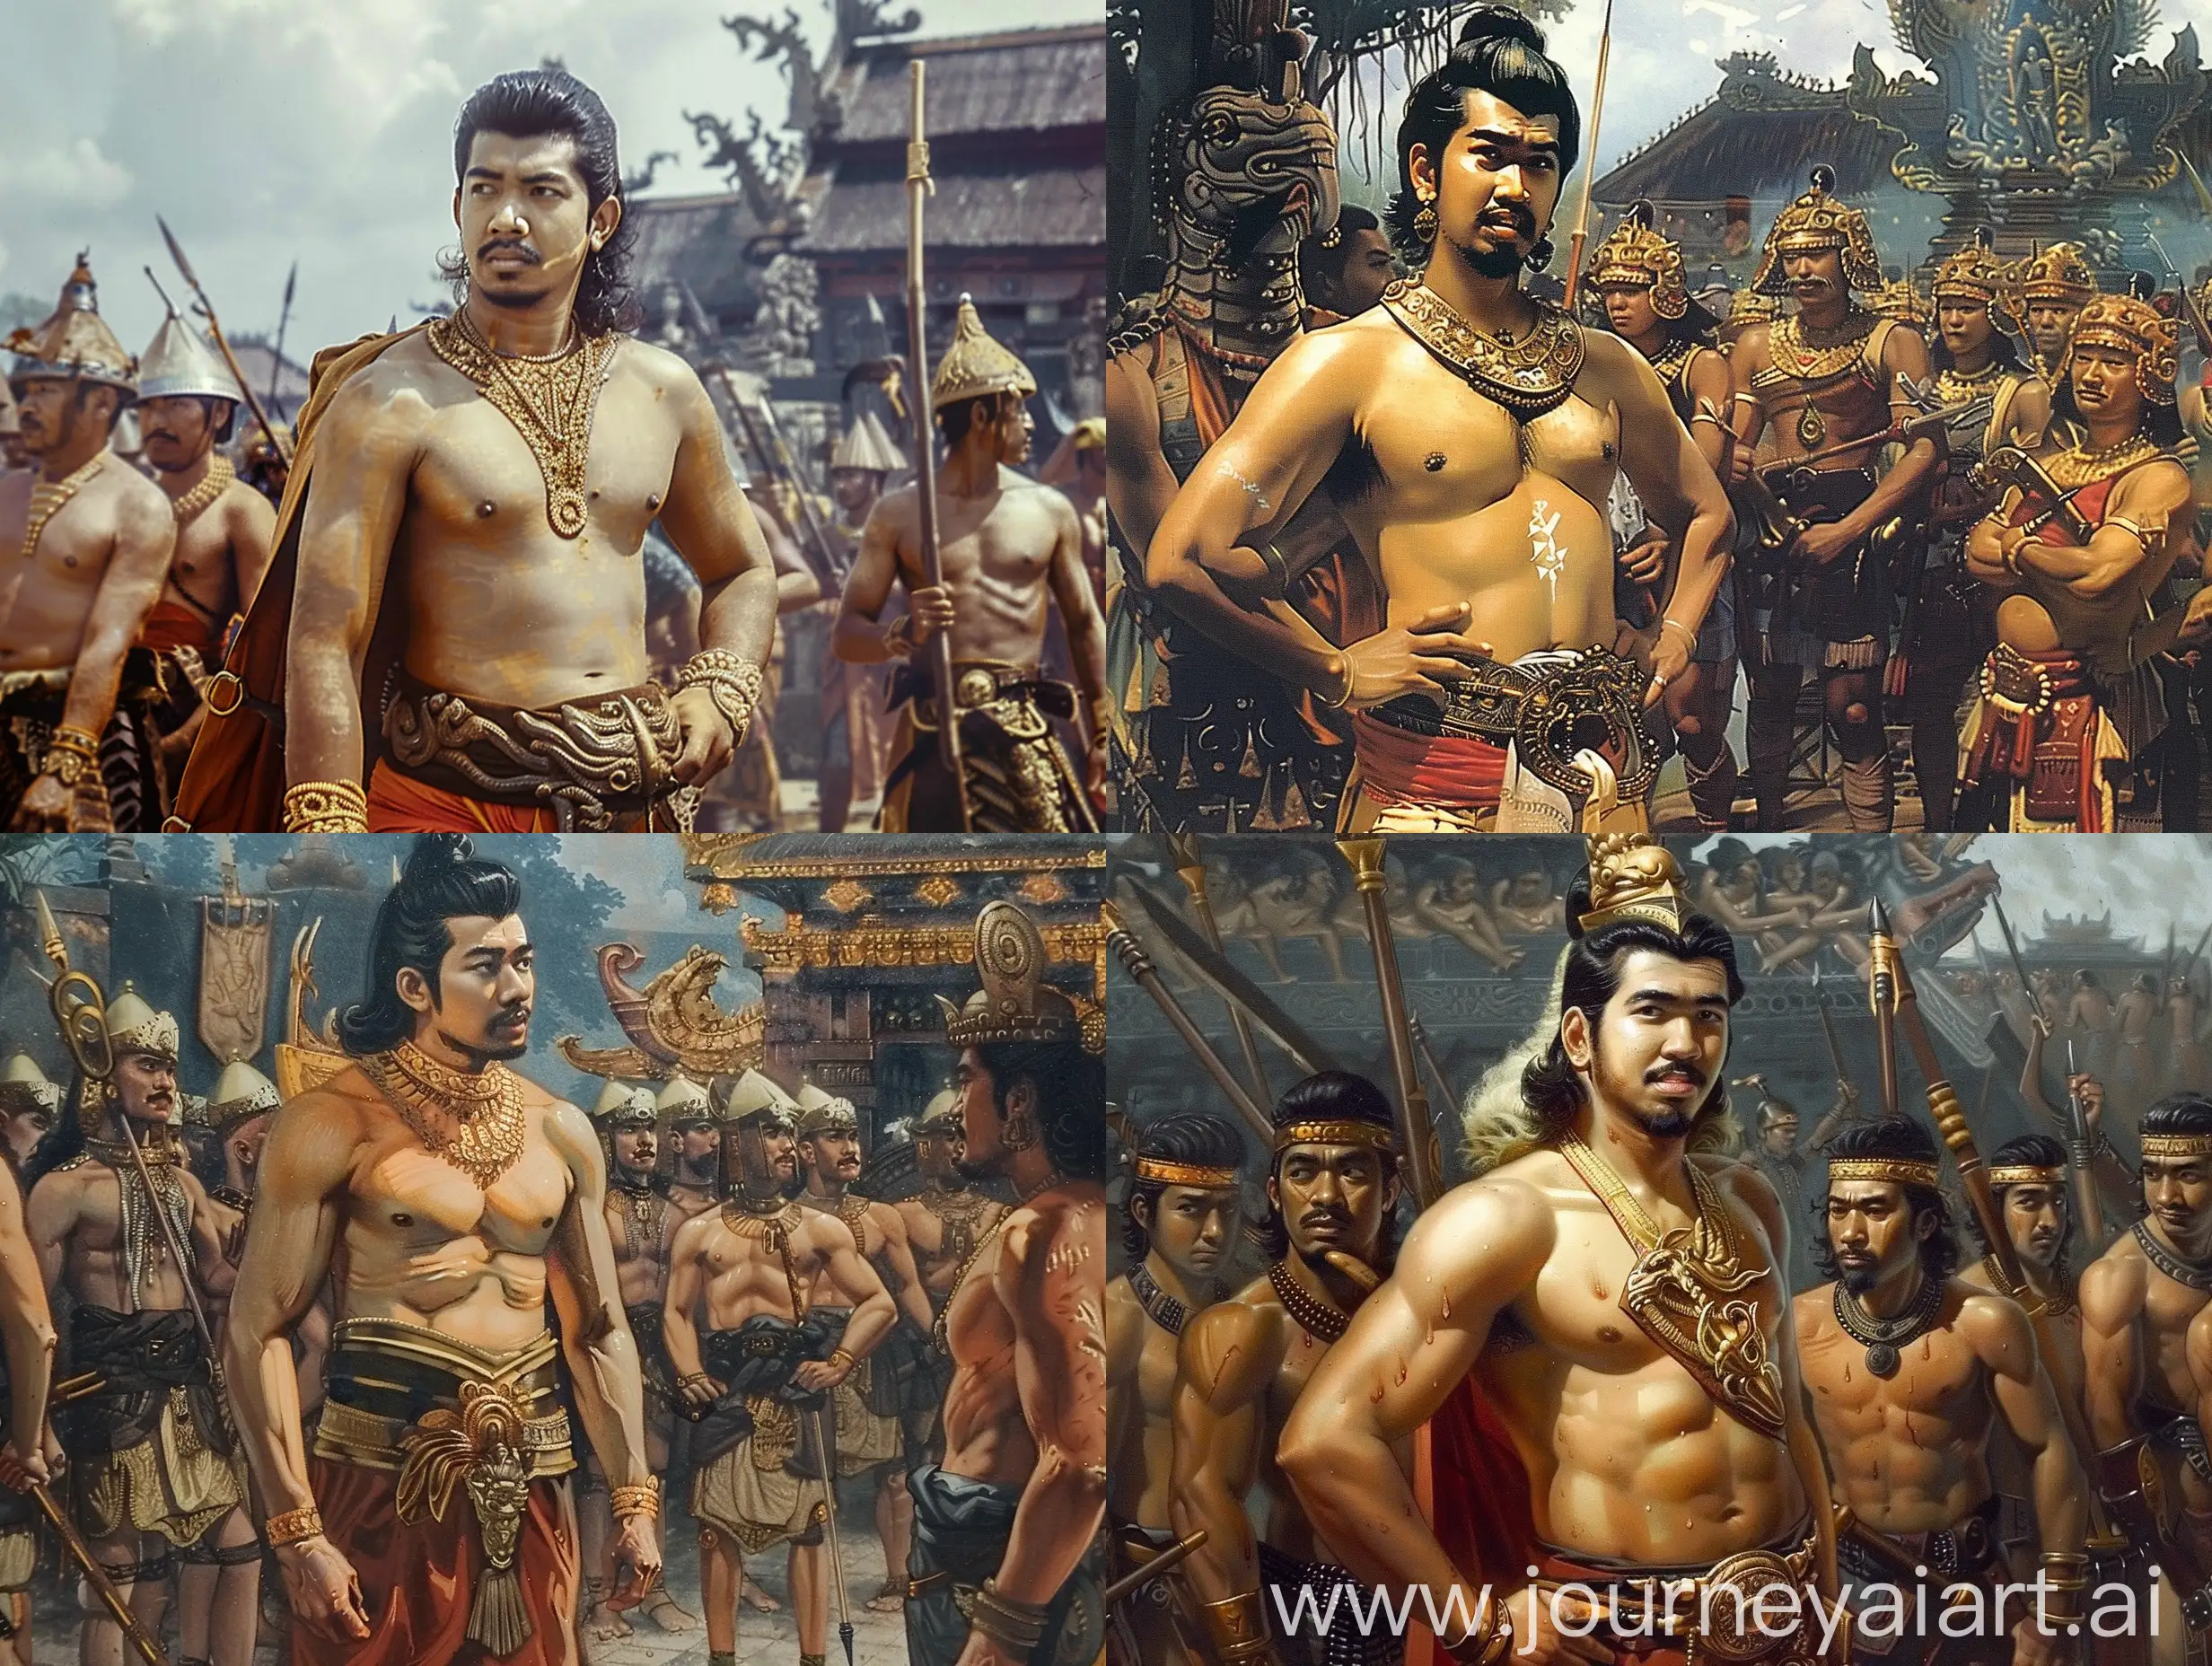 Prince-Hayam-Wururk-of-Majapahit-Kingdom-Preparing-for-War-with-Shirtless-Troops